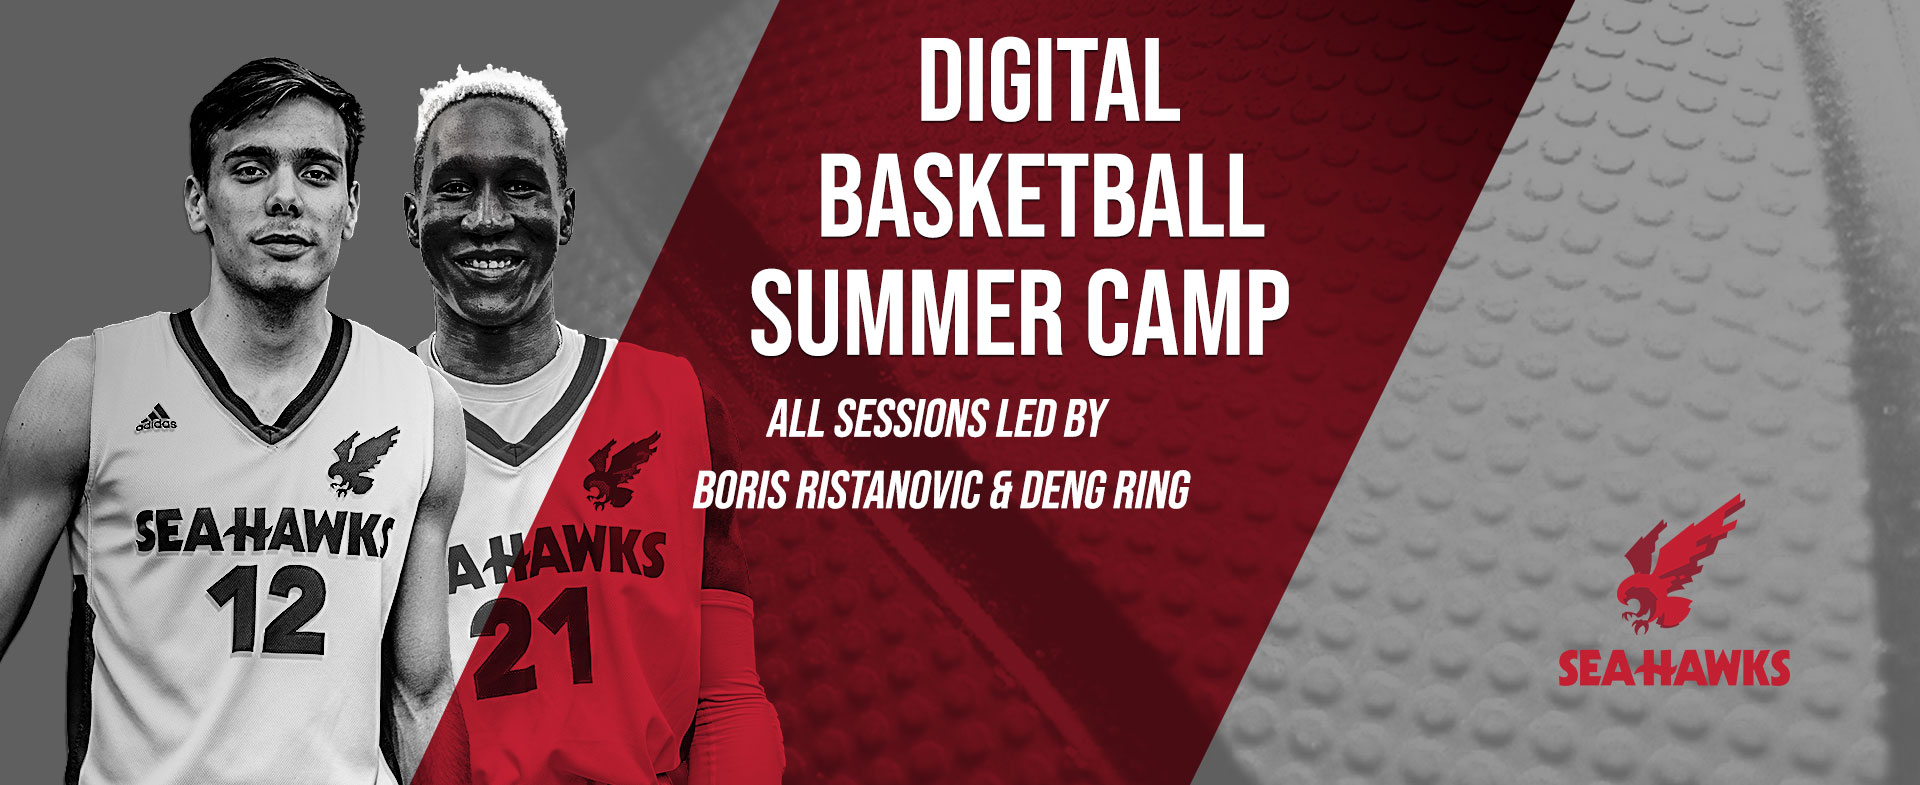 Digital Basketball Camp